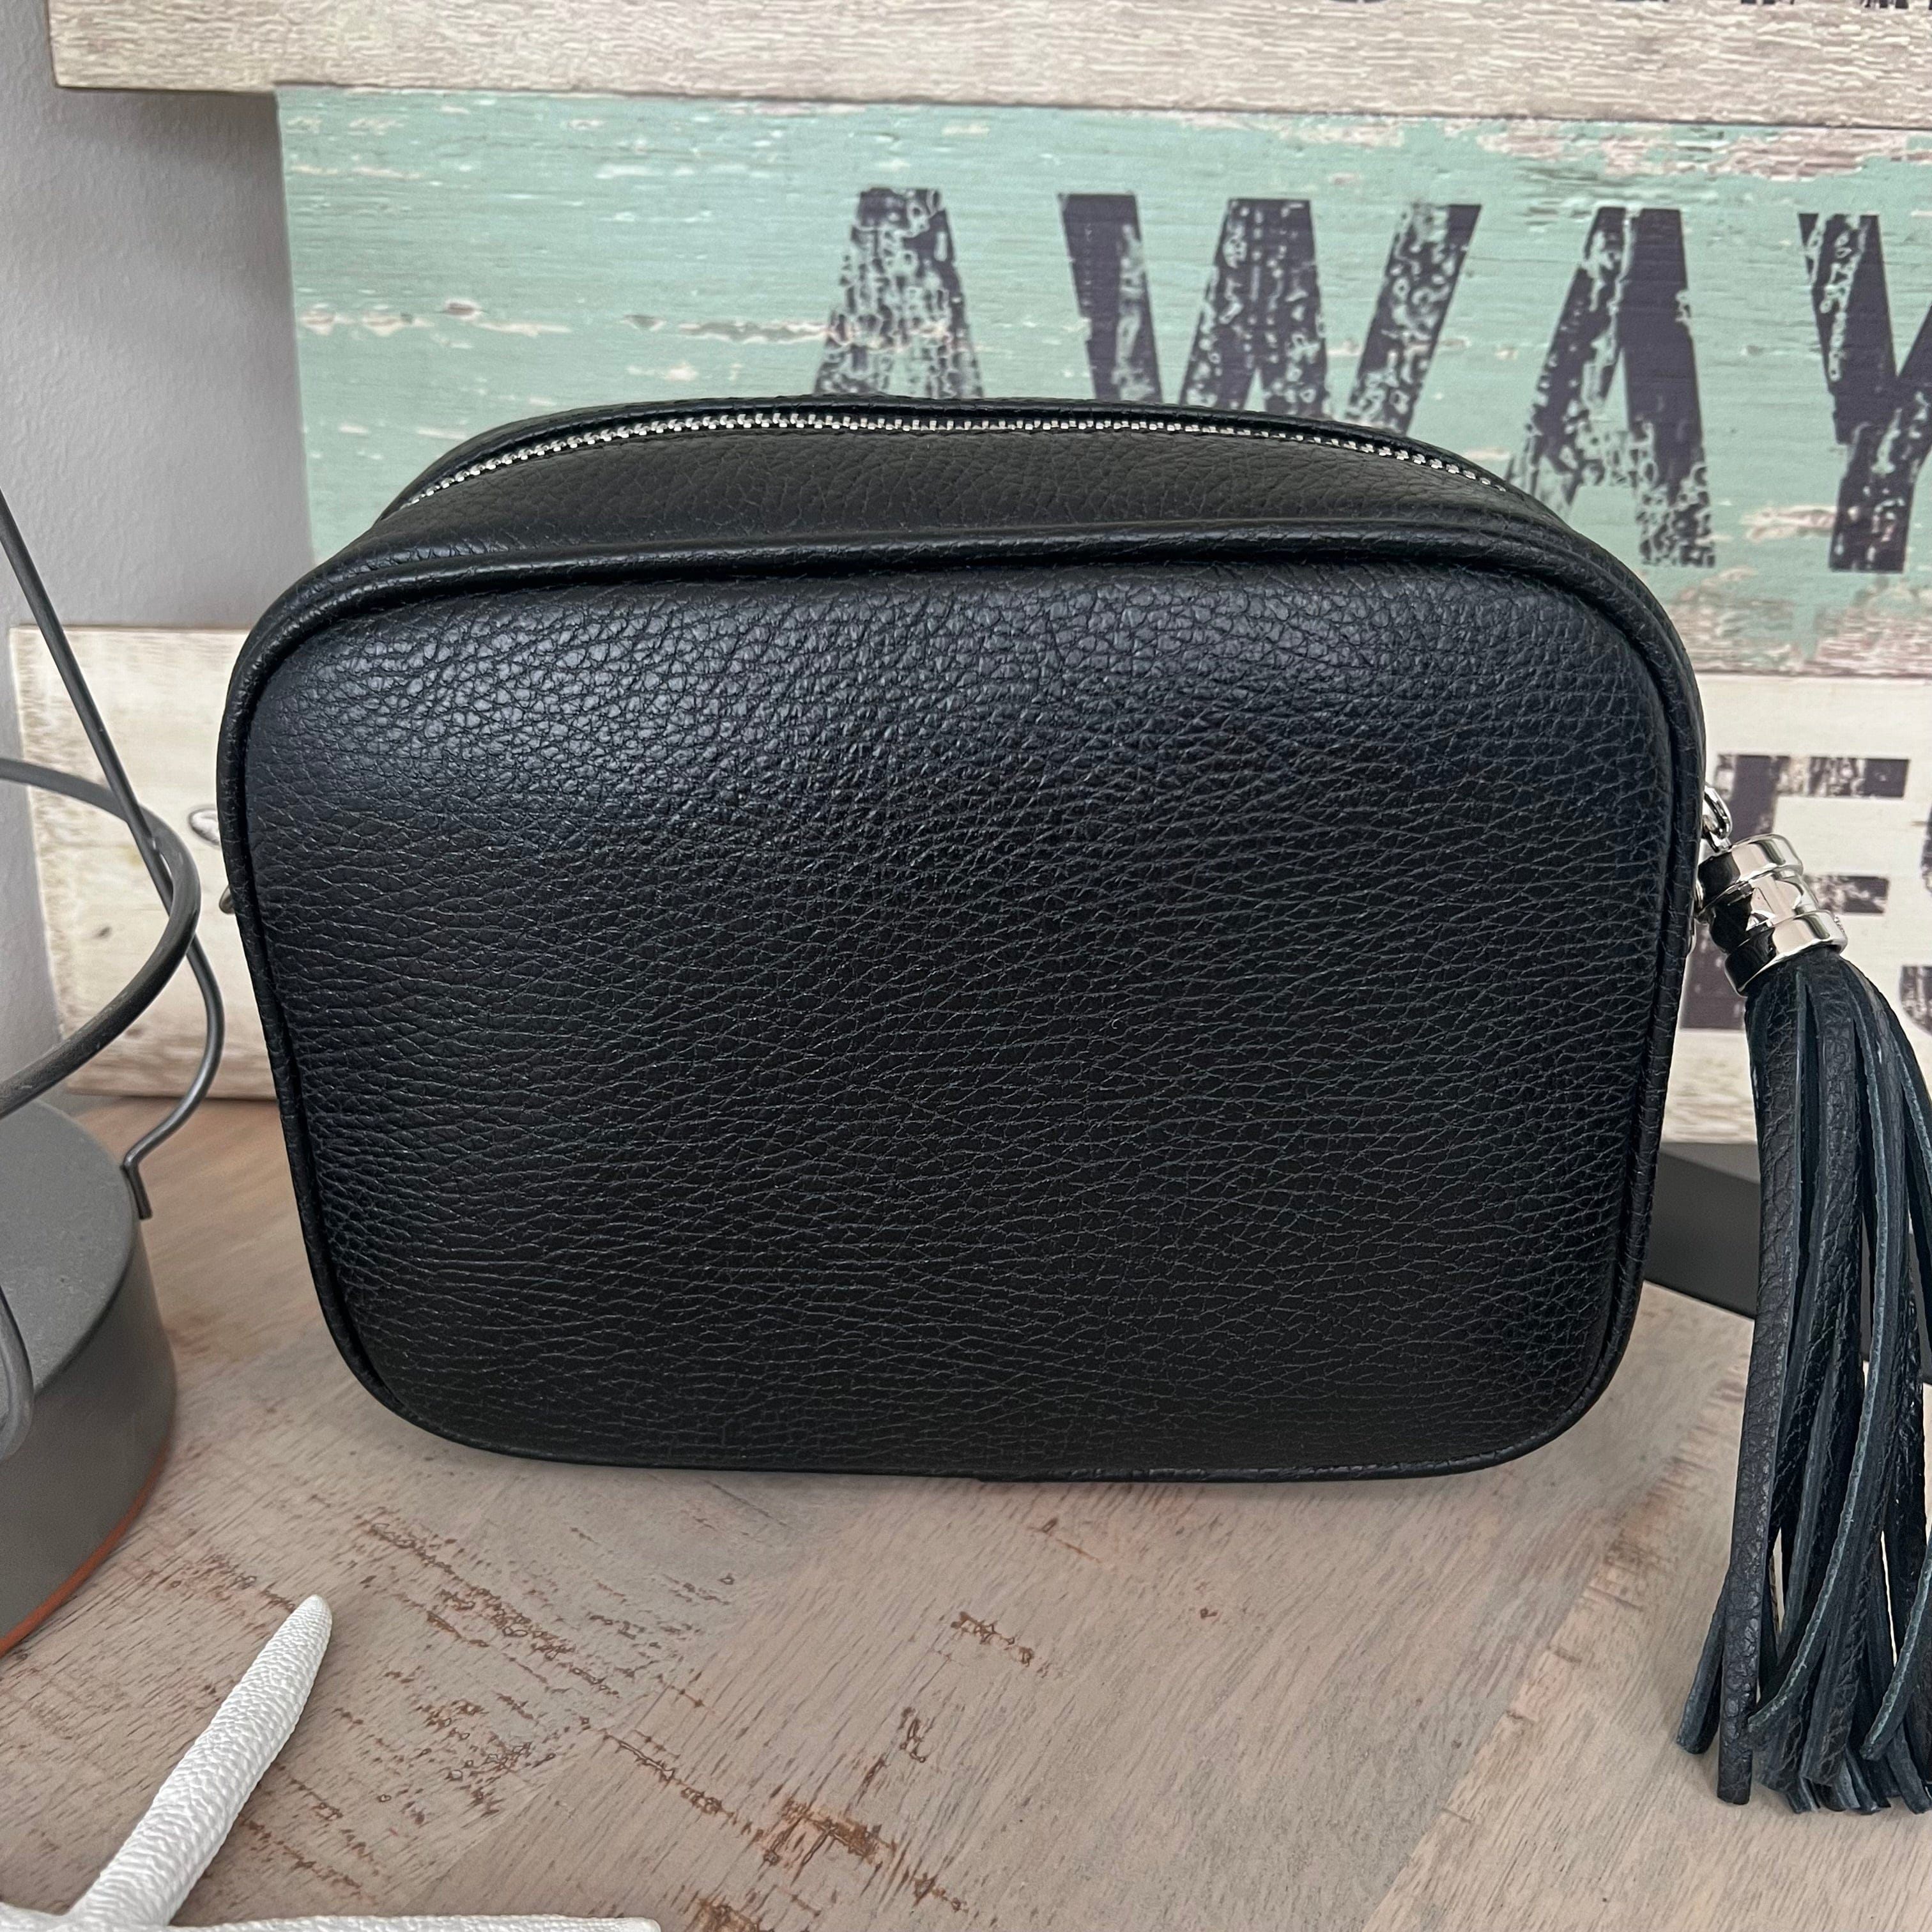 lusciousscarves Handbags Black Leather tassel camera style crossbody bag.